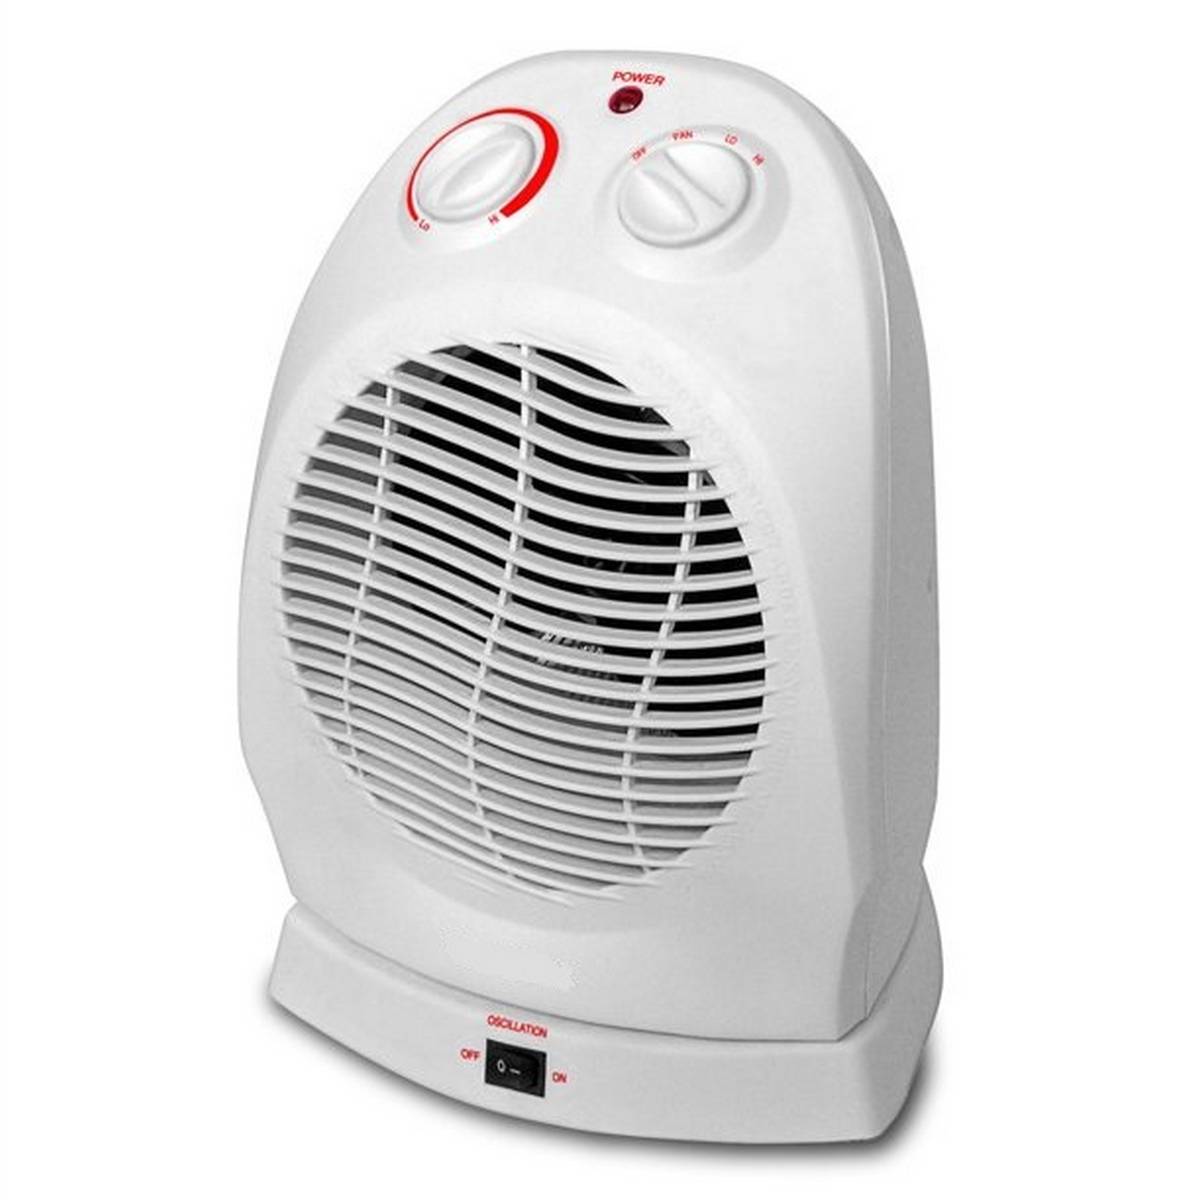 MAXX Electric Fan Heater (MX-117)